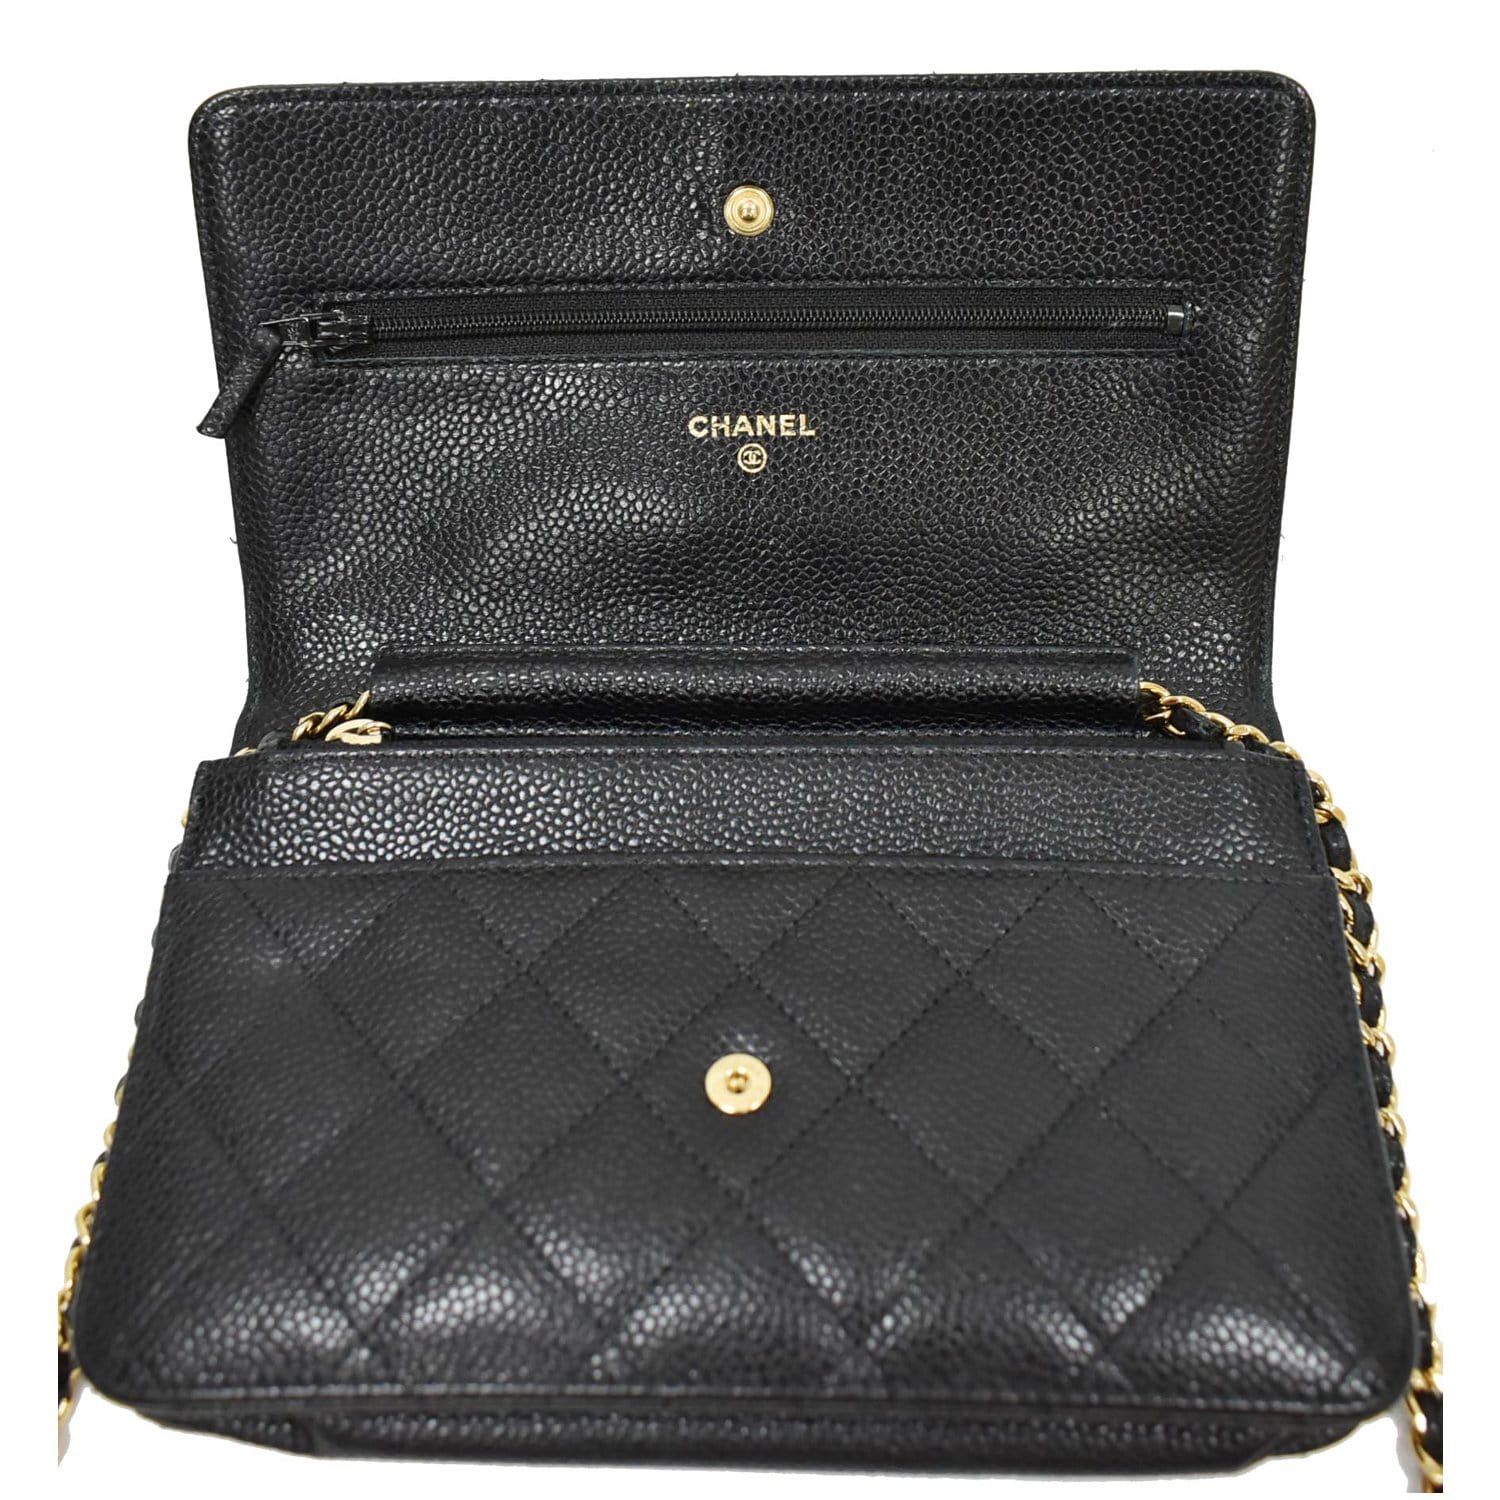 Chanel Crossbody Chain Shoulder Bag Pouch Black Caviar Skin 4670886 89579